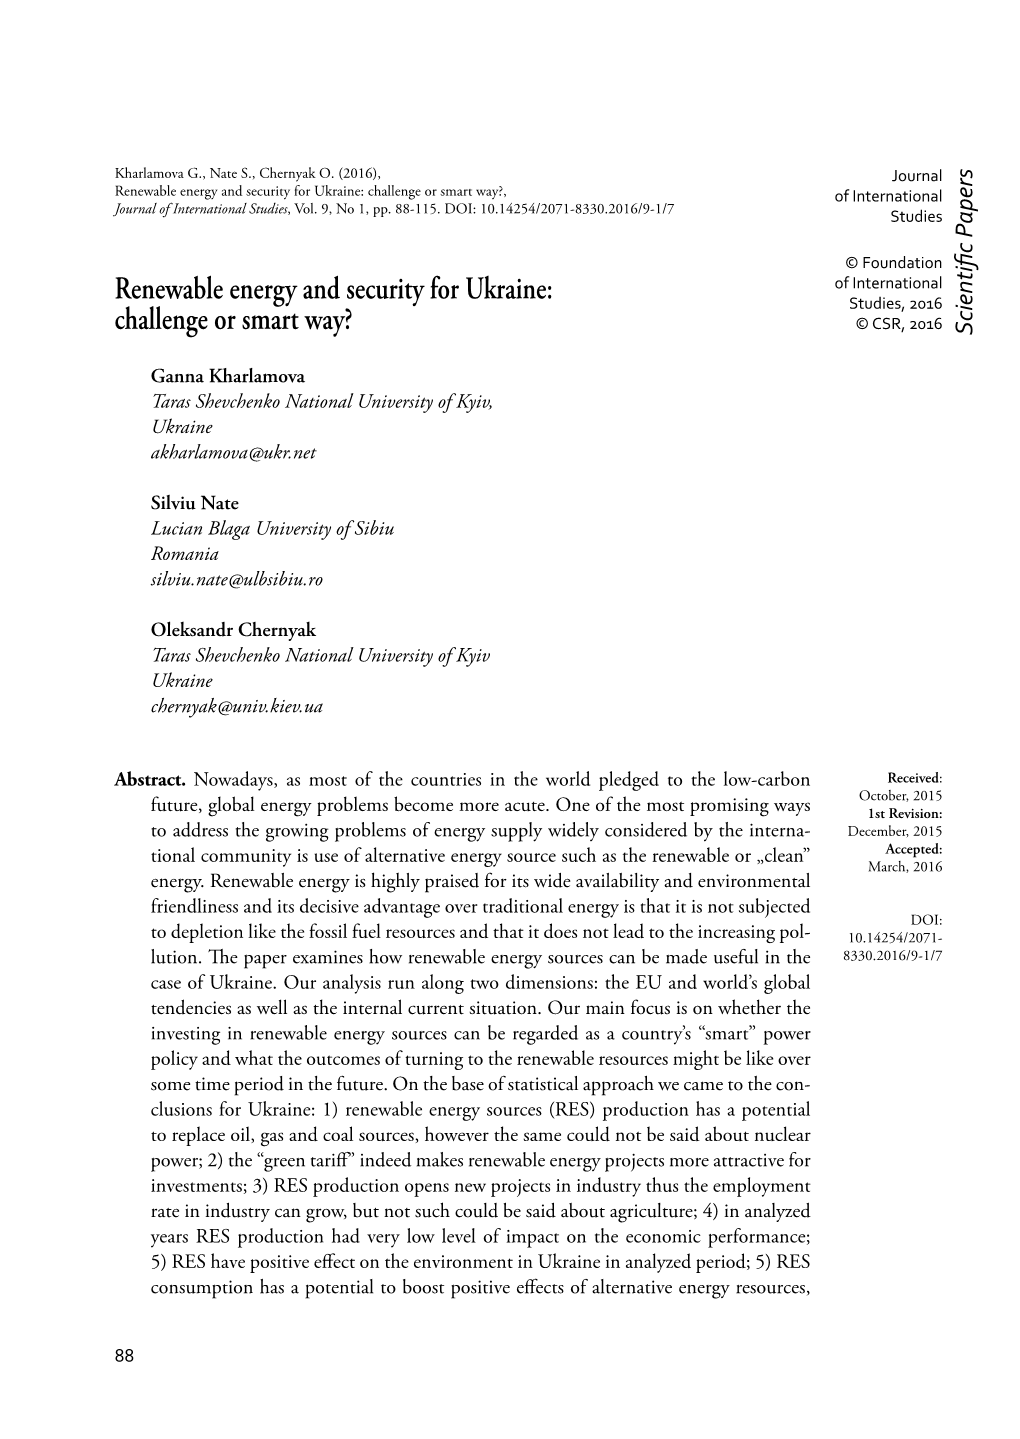 Renewable Energy and Security for Ukraine: Challenge Or Smart Way?, of International Journal of International Studies, Vol